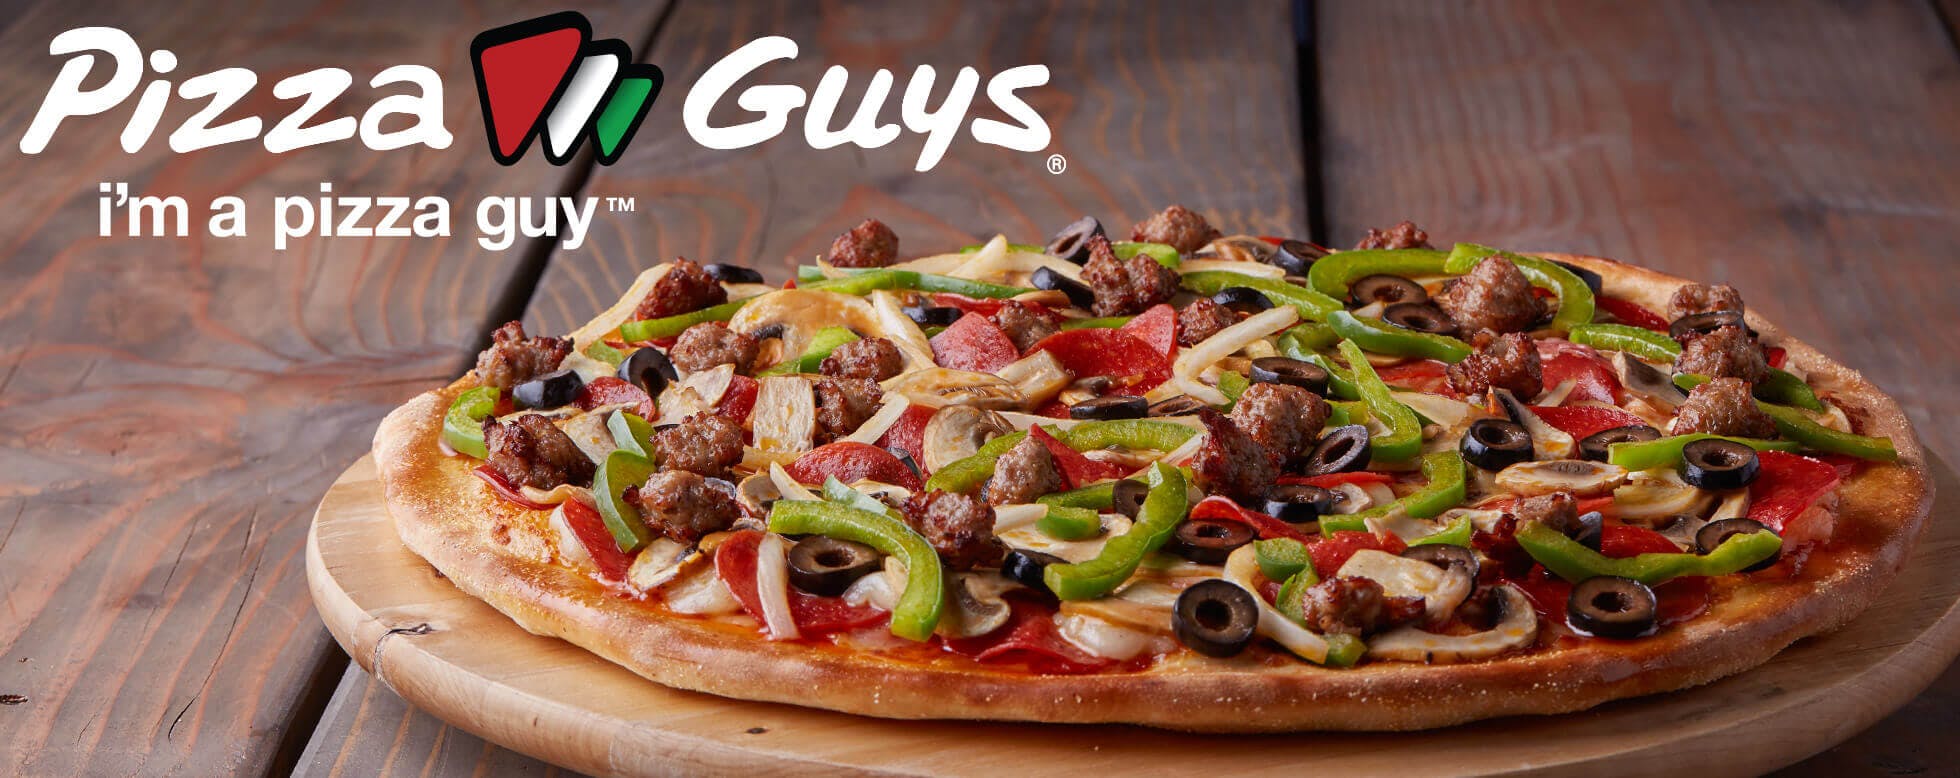 Pizza Guys Menu - Apple Valley, CA - Order Delivery | Slice